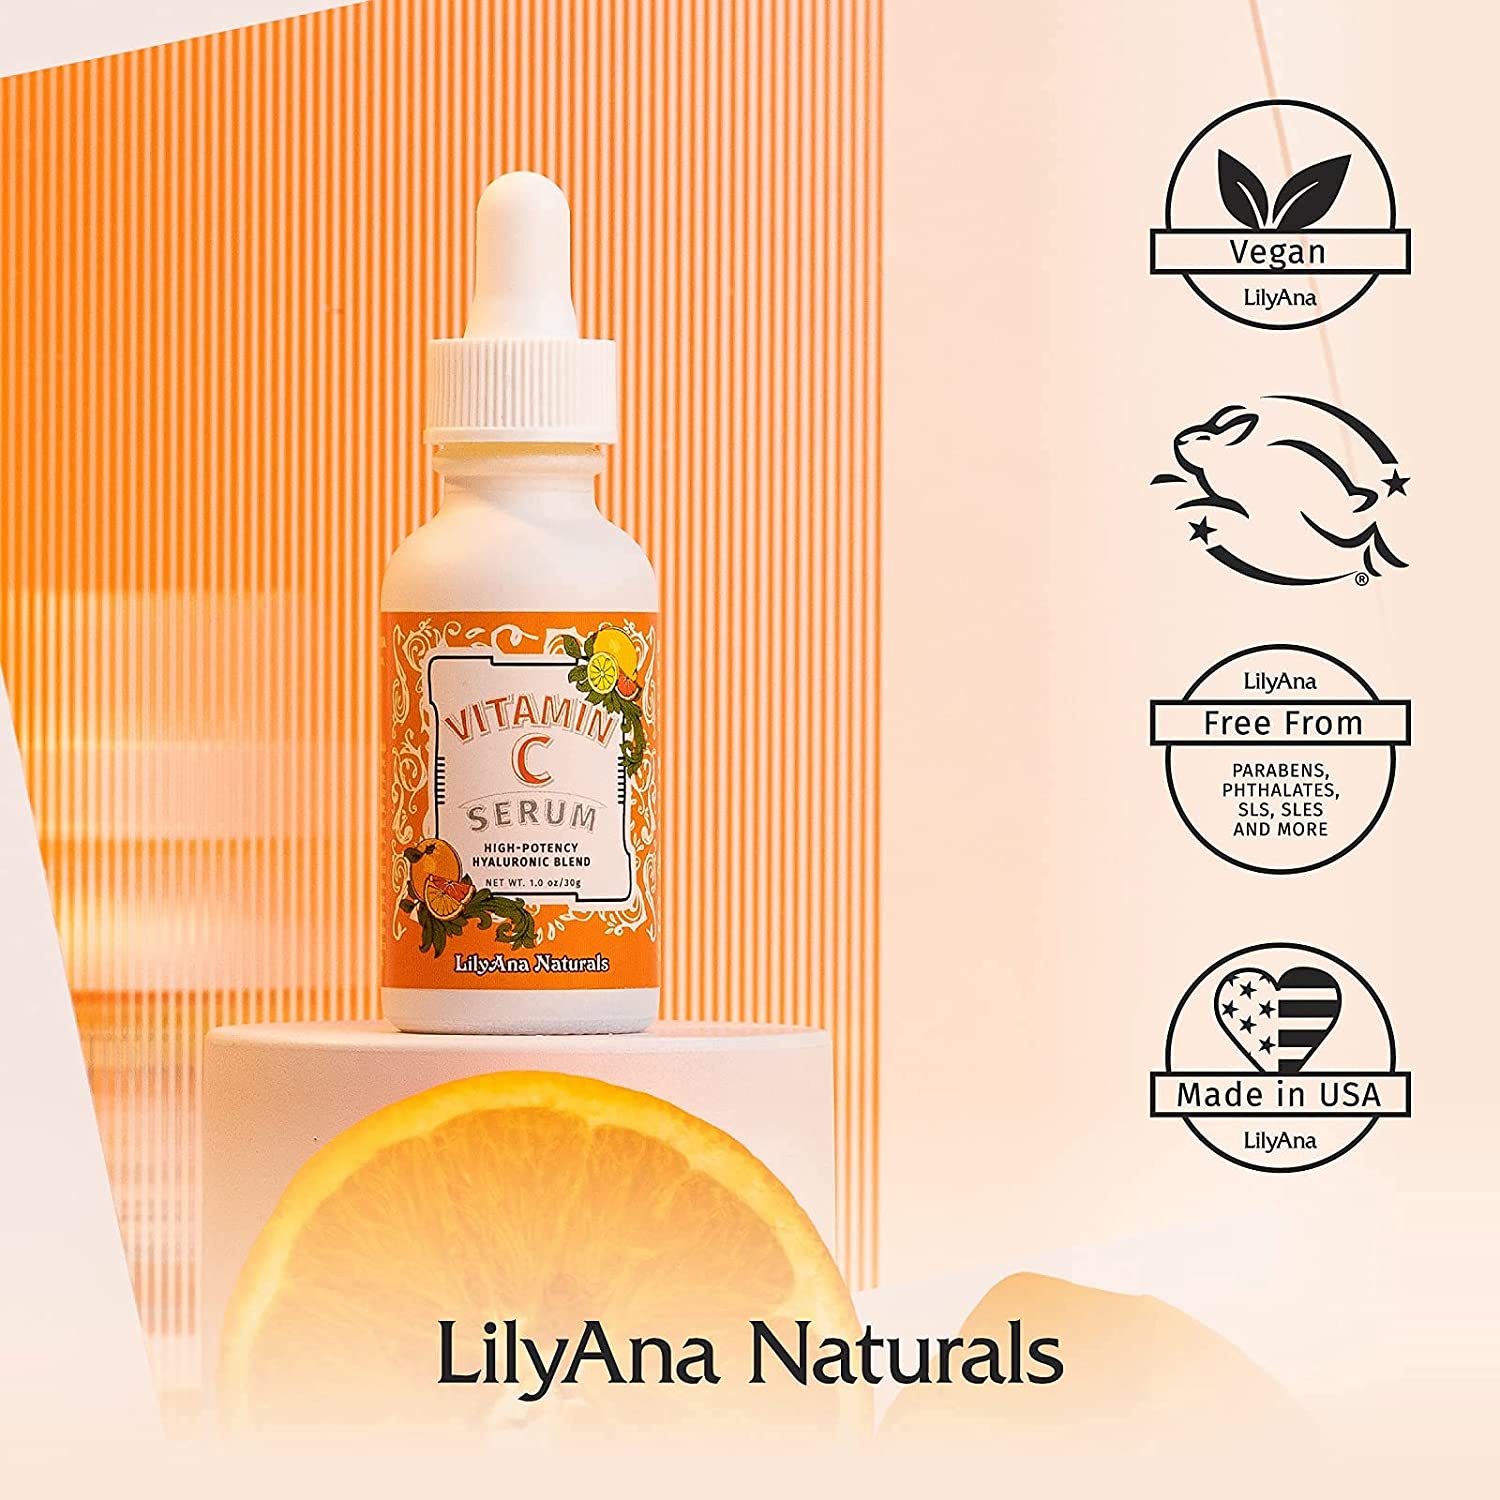 Lilyana Naturals Vitamin C Serum - 30 g